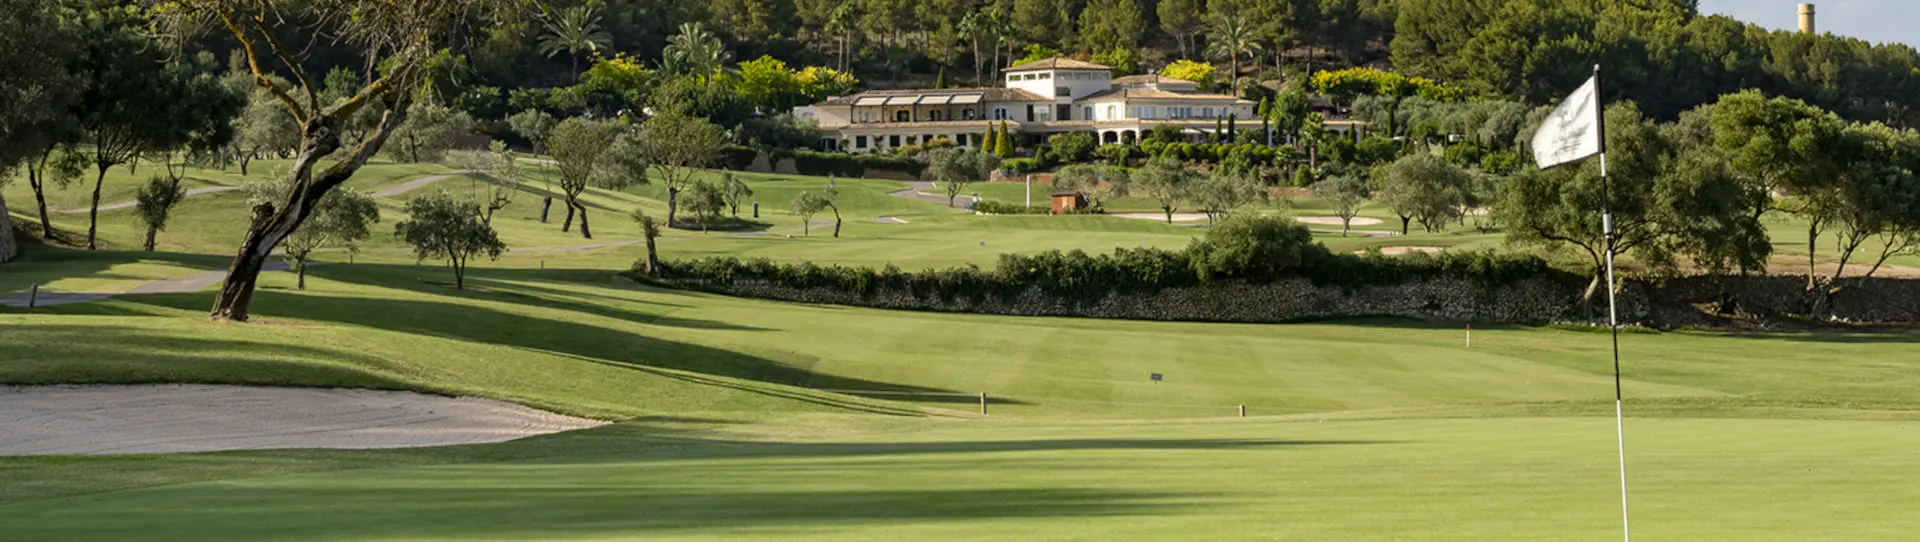 Spain golf holidays - Arabella Mallorca Trio Experience - Photo 2